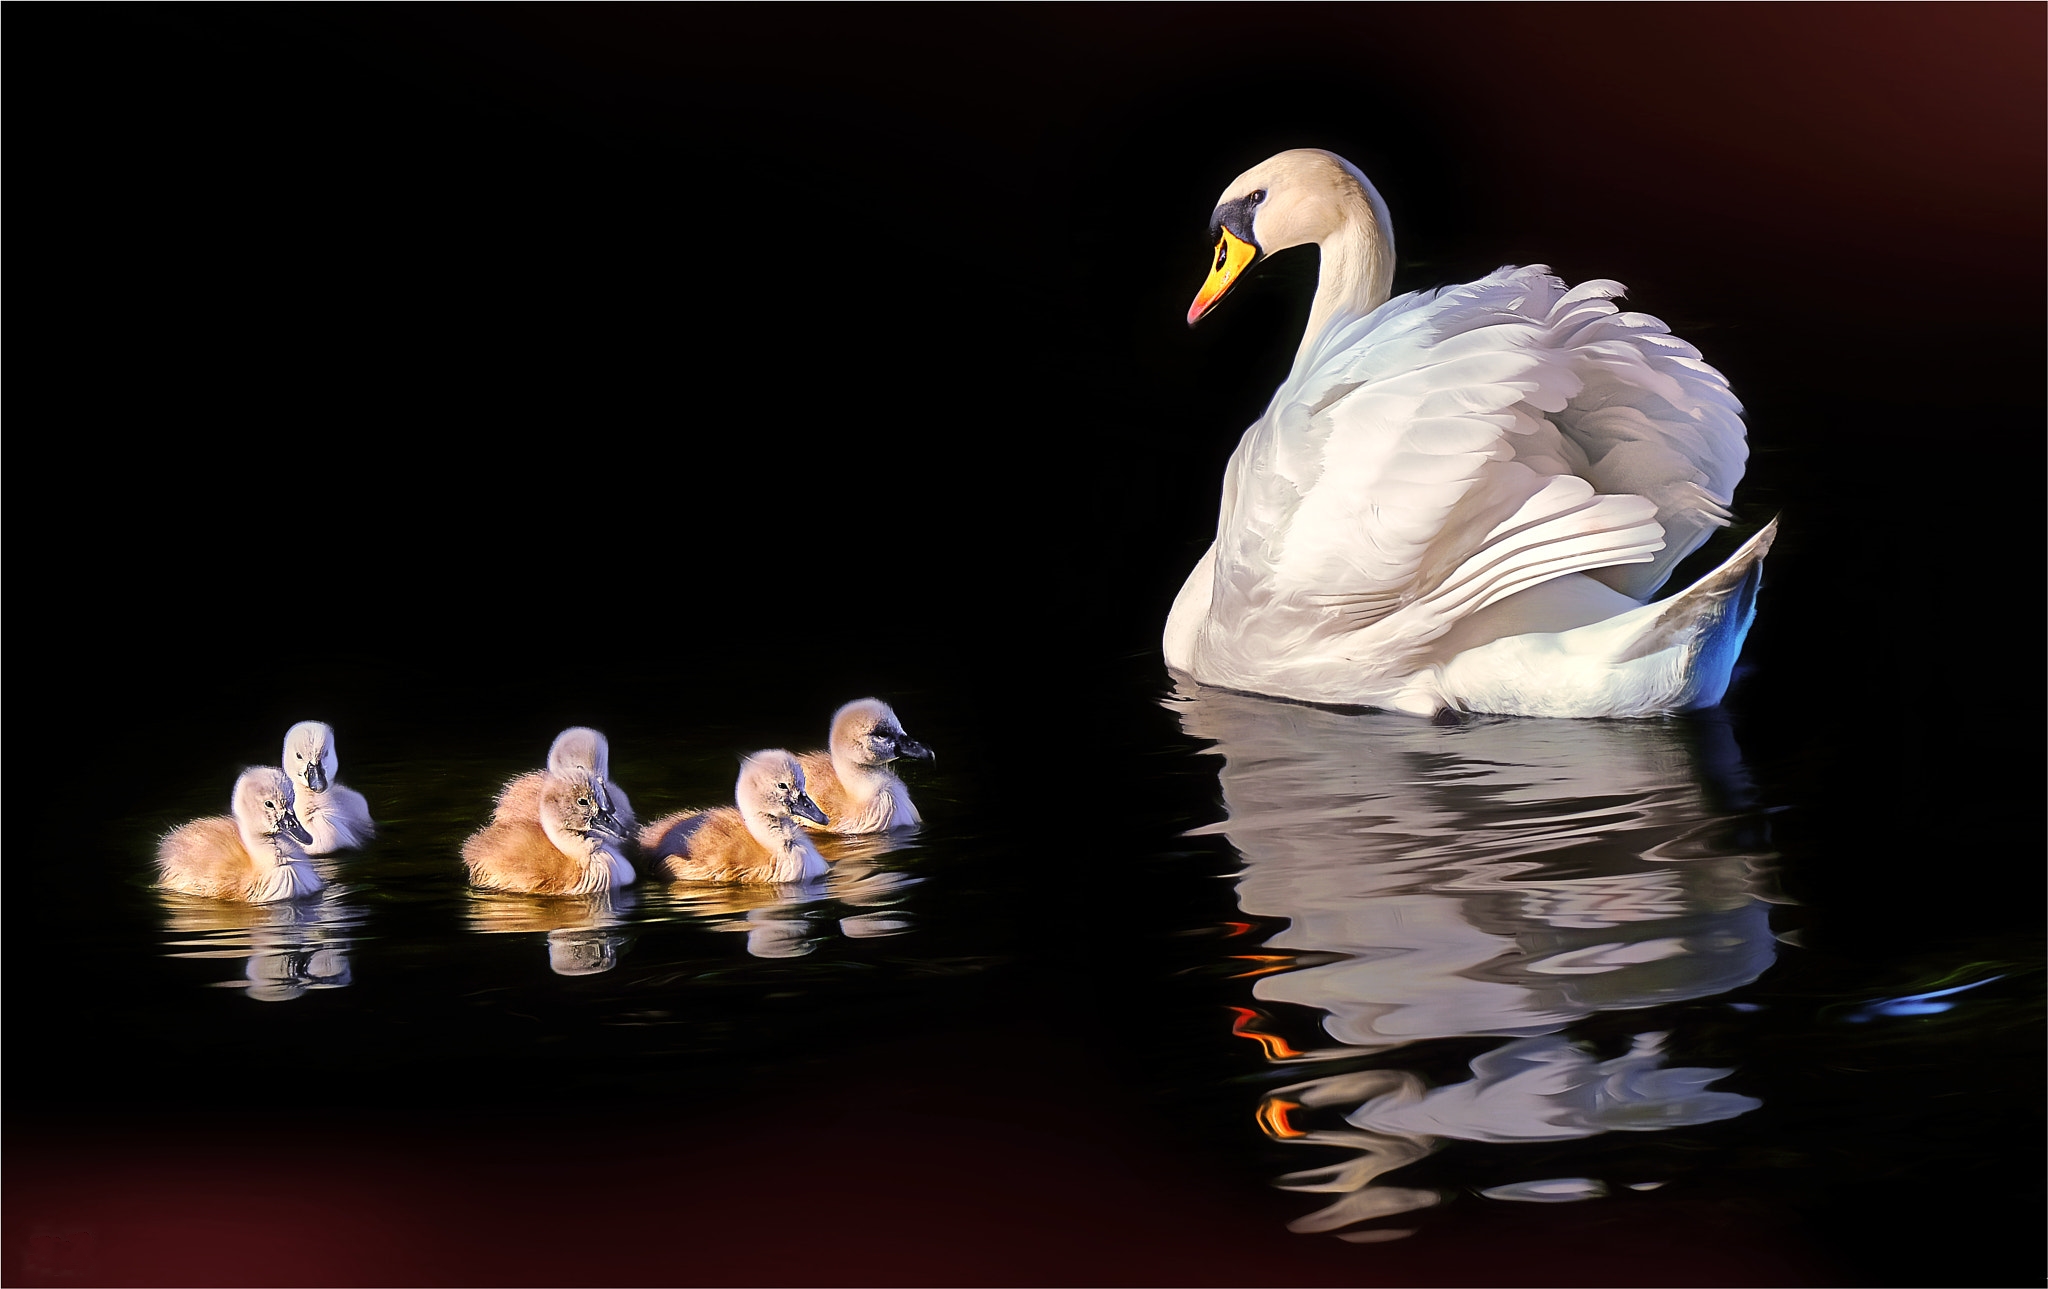 Wallpapers night pond Swan on the desktop